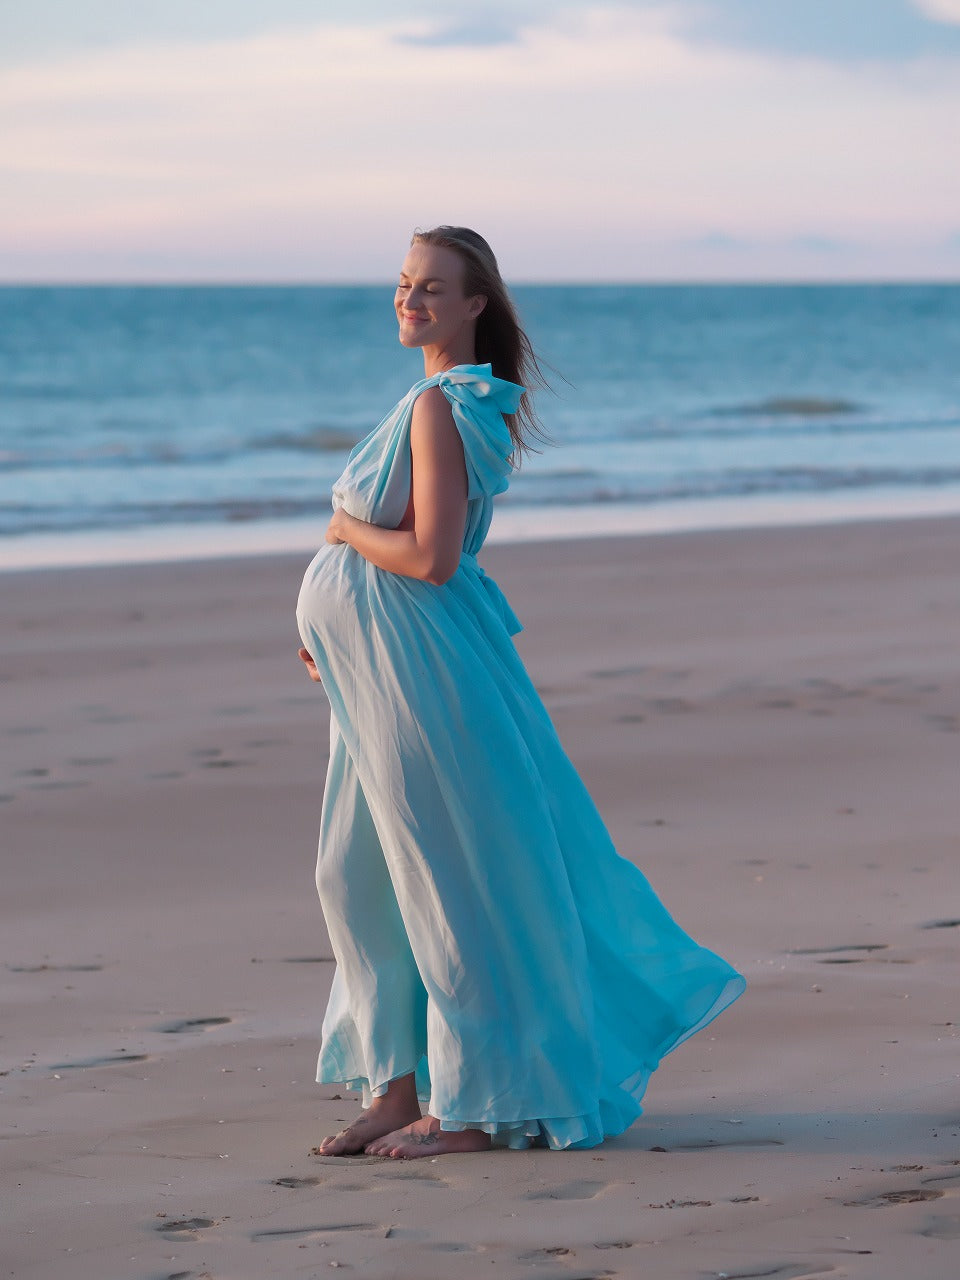 Dress Hire - Maternity Photoshoot Dresses - Vneck Blue Dress - DAY RENTAL